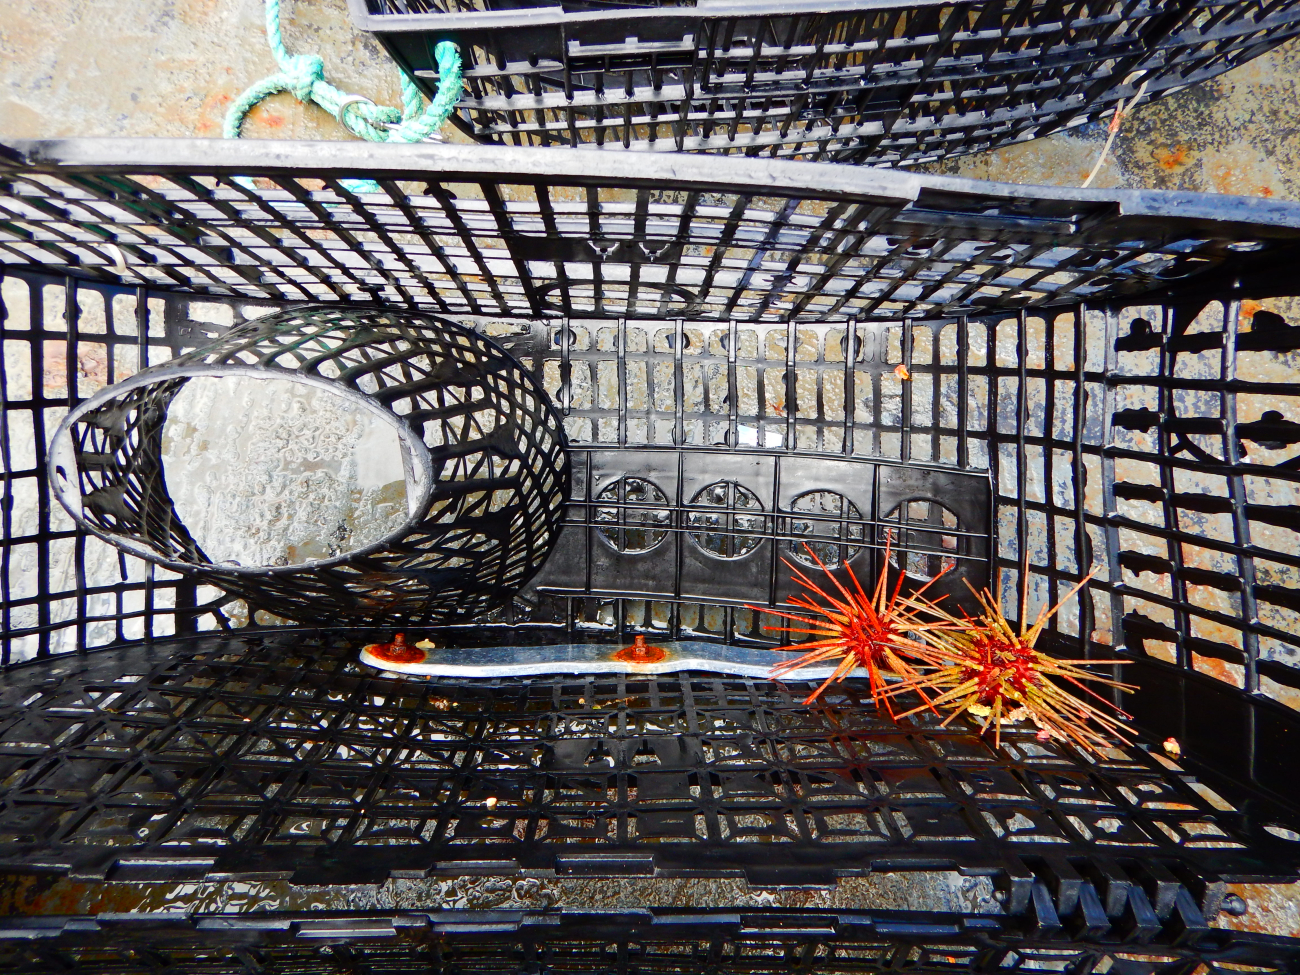 Hawaiian lobster trap catch (sea urchins)